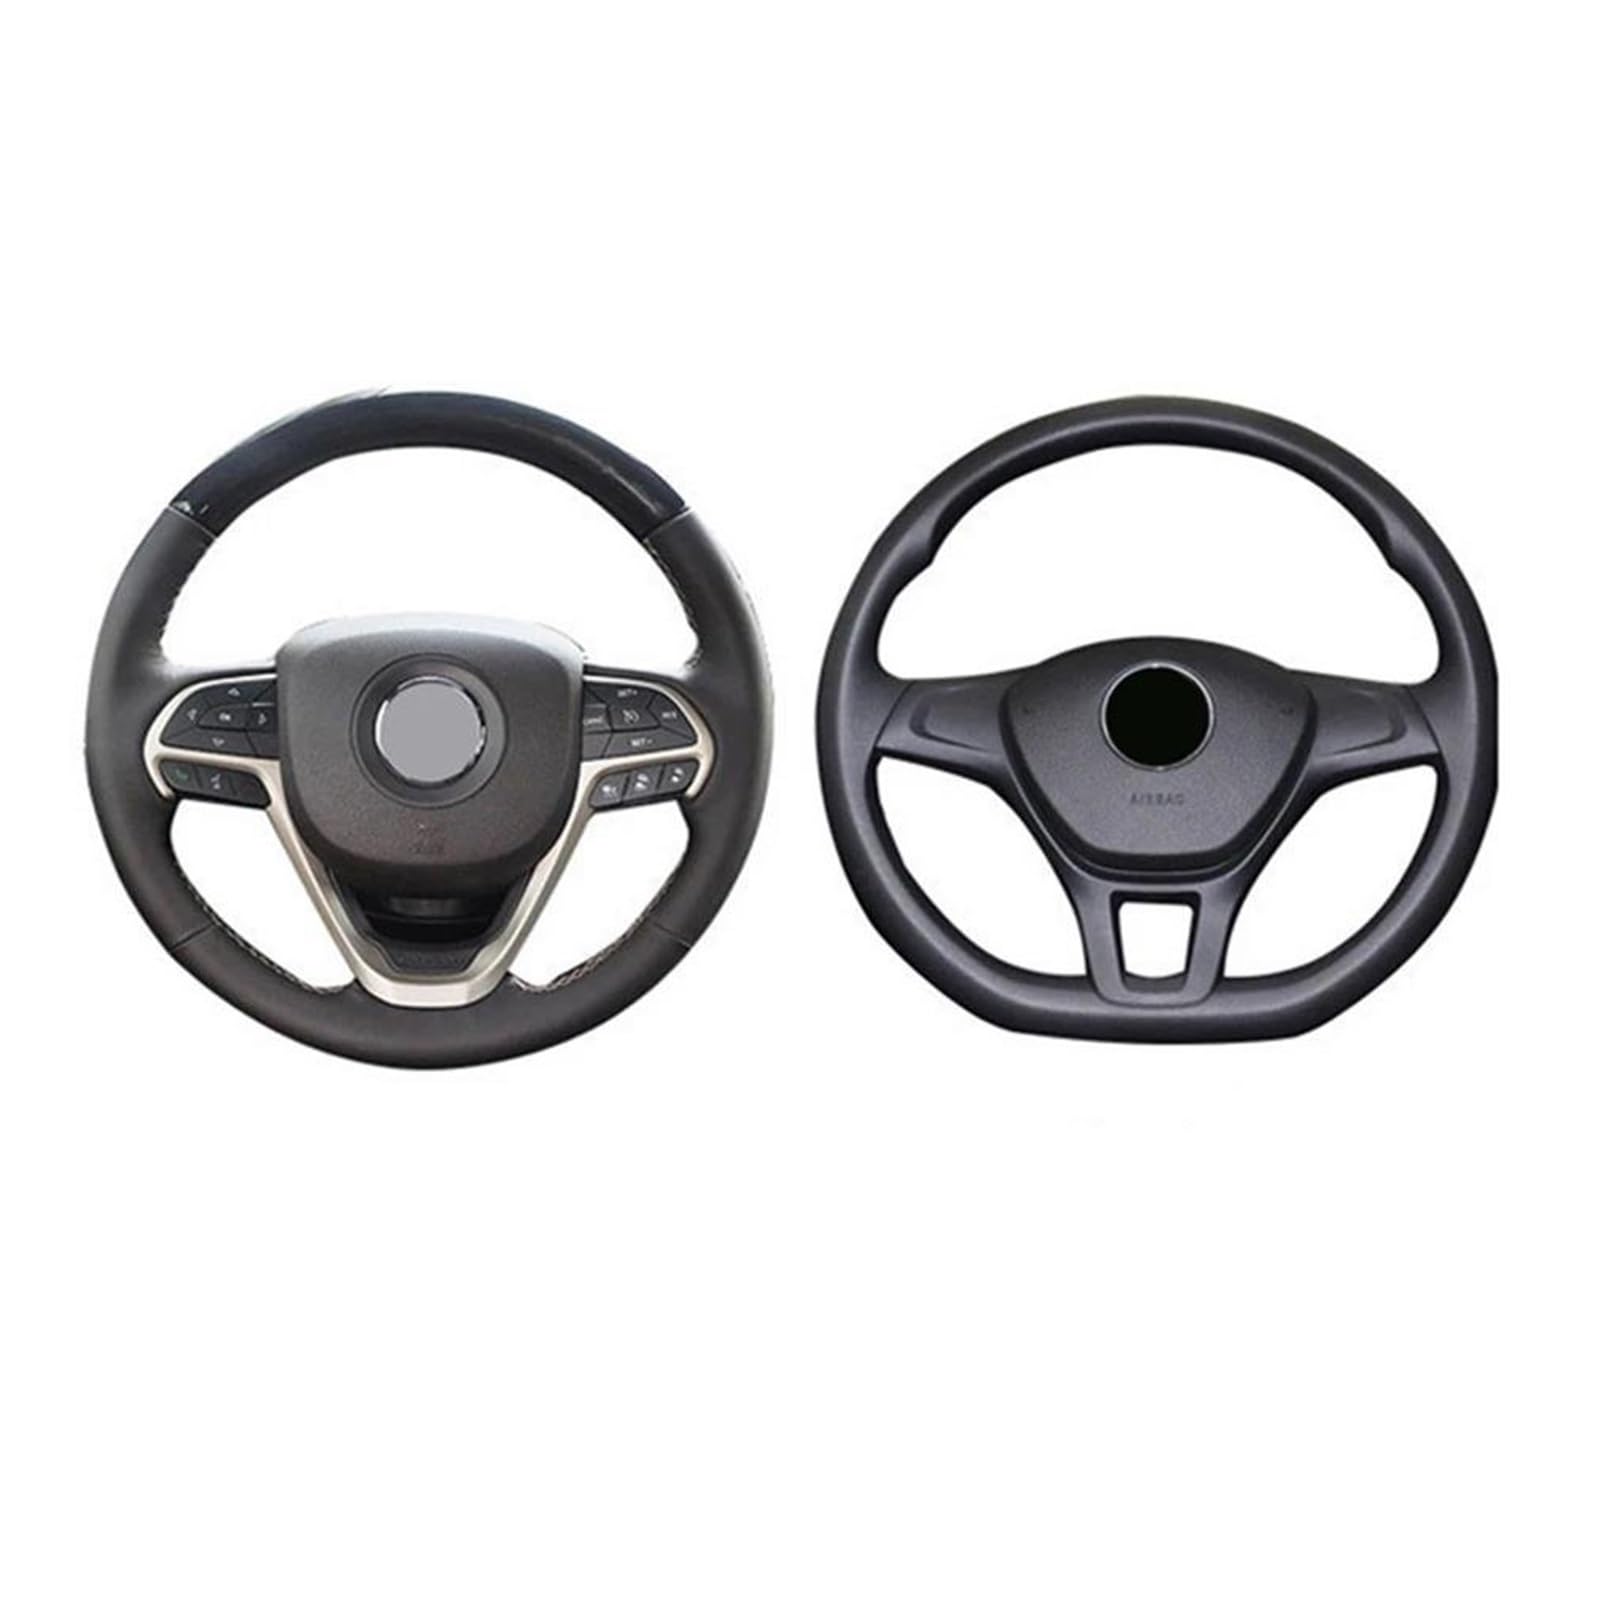 Steering Wheel Cover Für E46 E90 E60 F10 F30 E39 E36 F20 E92 E87 E70 E30 E46 E91 Anti Slip Staubdicht Atmungsaktive Leder Auto Lenkrad Abdeckung Lenkradabdeckung(Wine) von CRUBVQQ